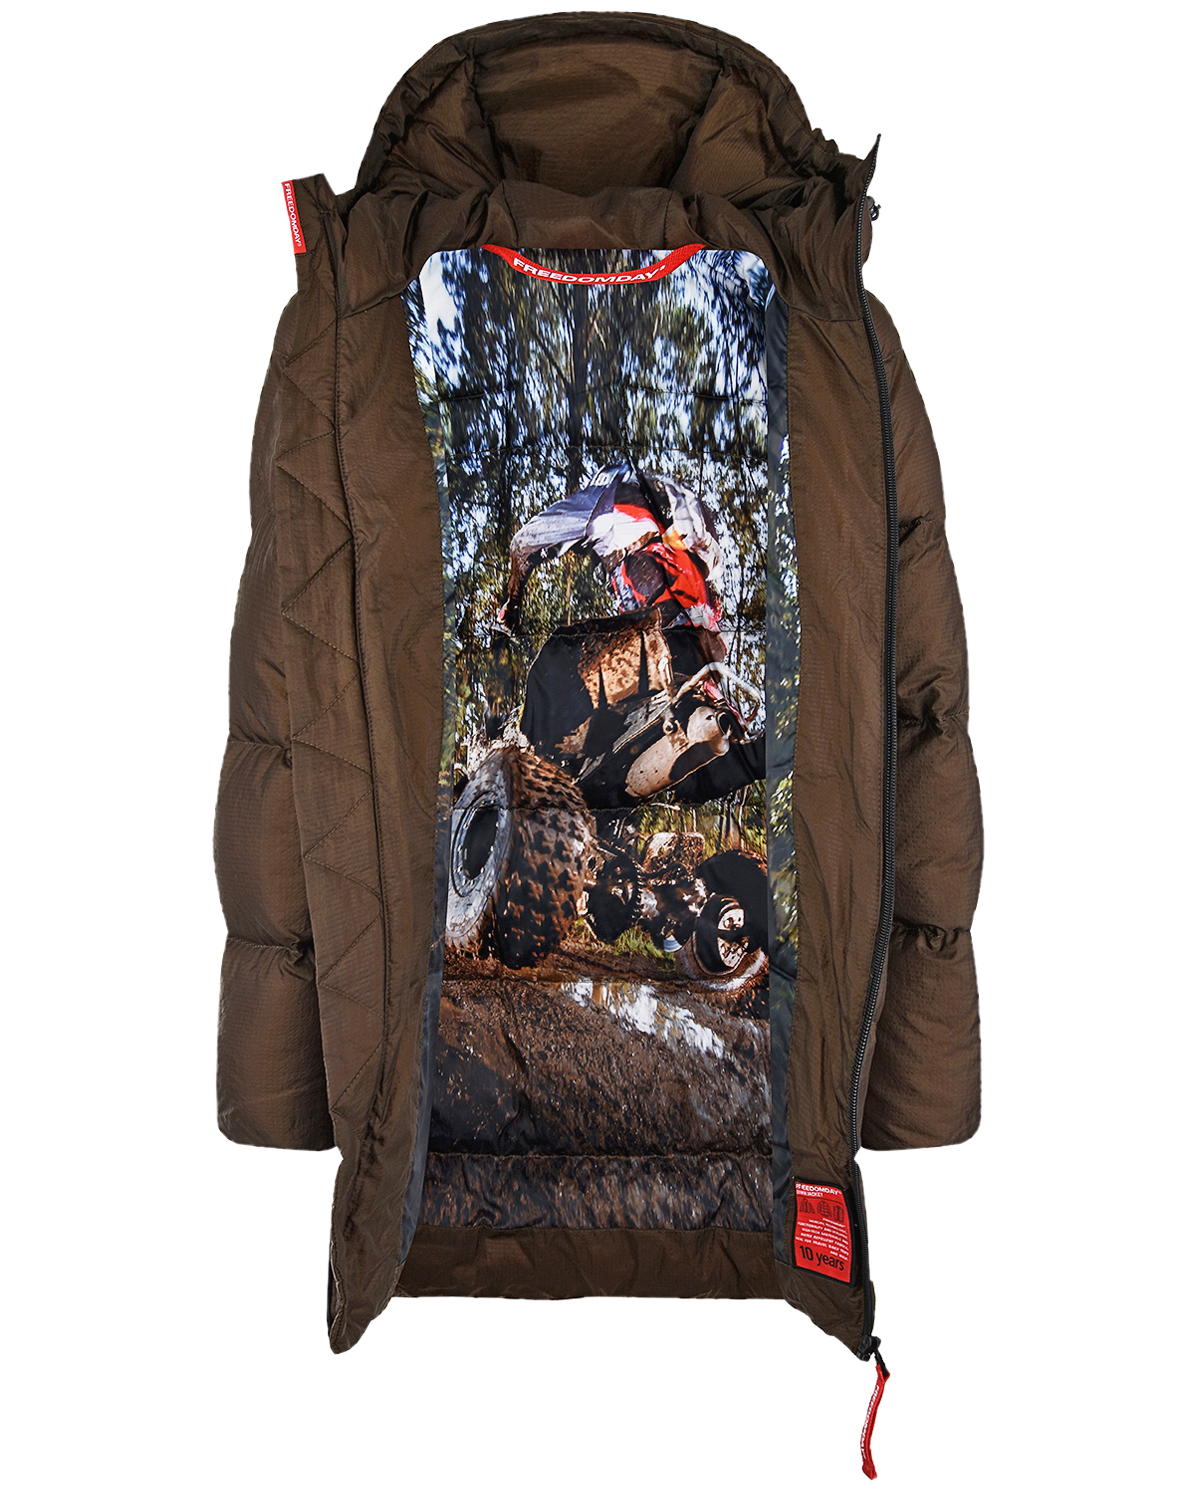 Зимняя куртка-парка цвета хаки Freedomday детская, размер 128 - фото 2